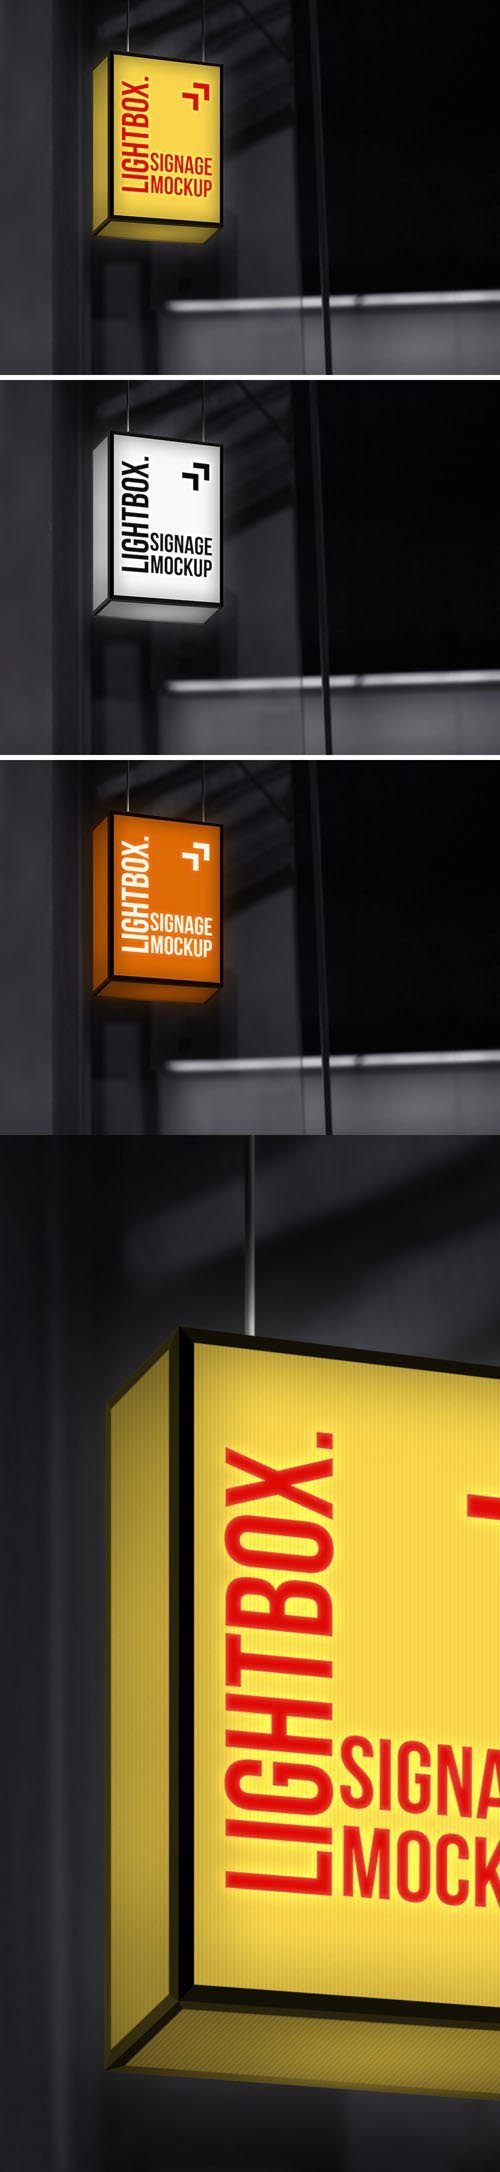 Hanging Neon Lightbox Signage PSD Mockup Template